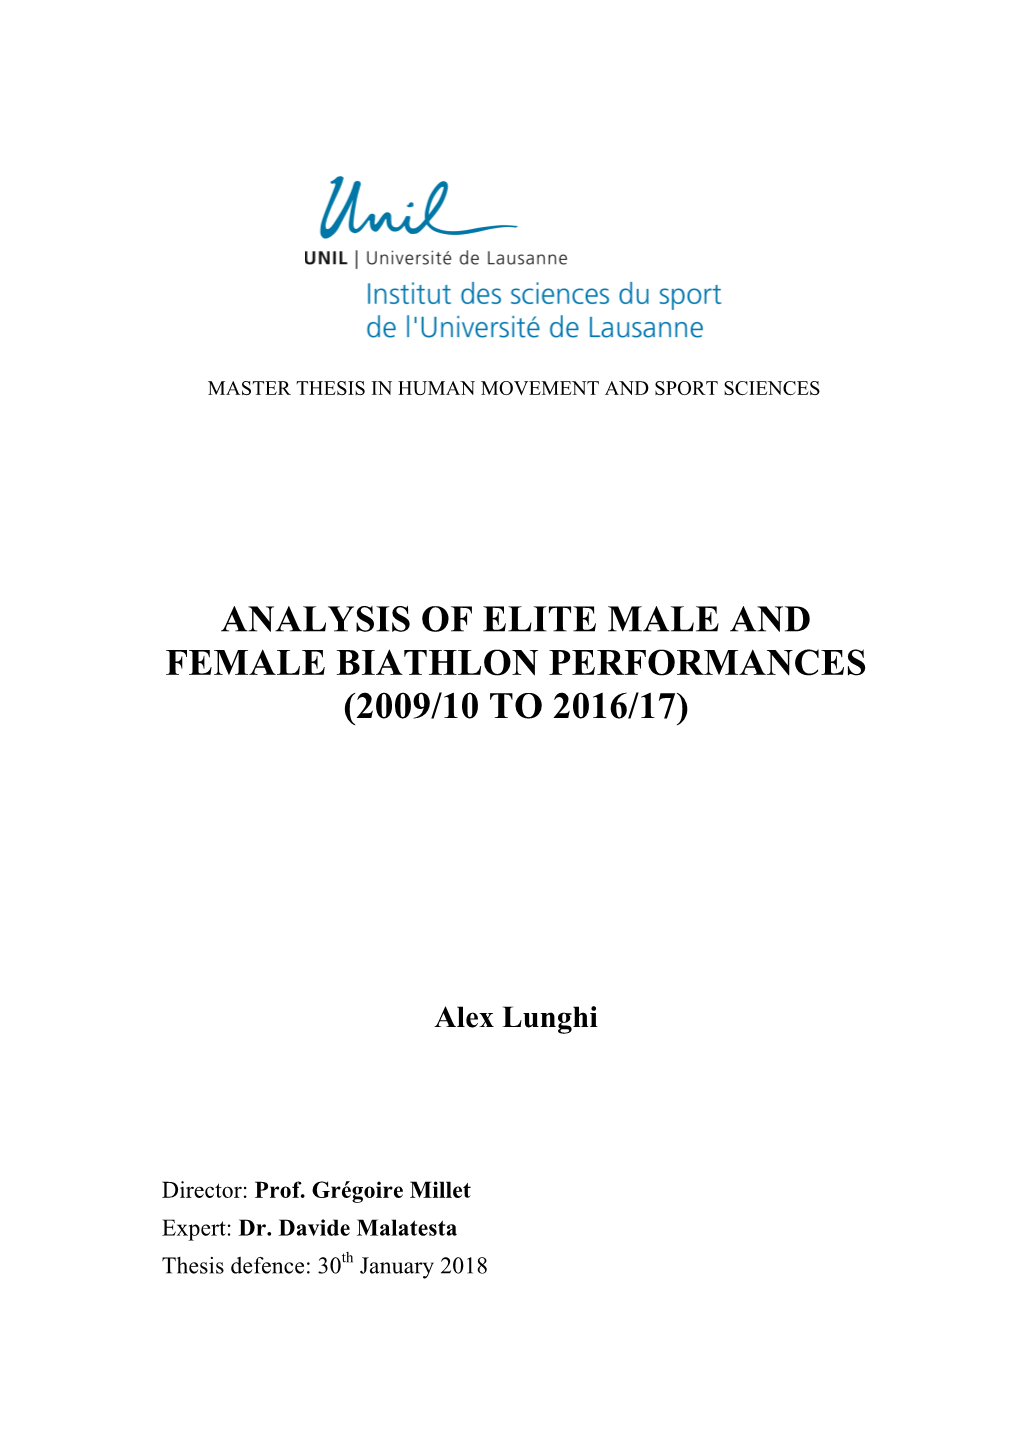 Analysis of Elite Male and Female Biathlon Performances (2009/10 to 2016/17)